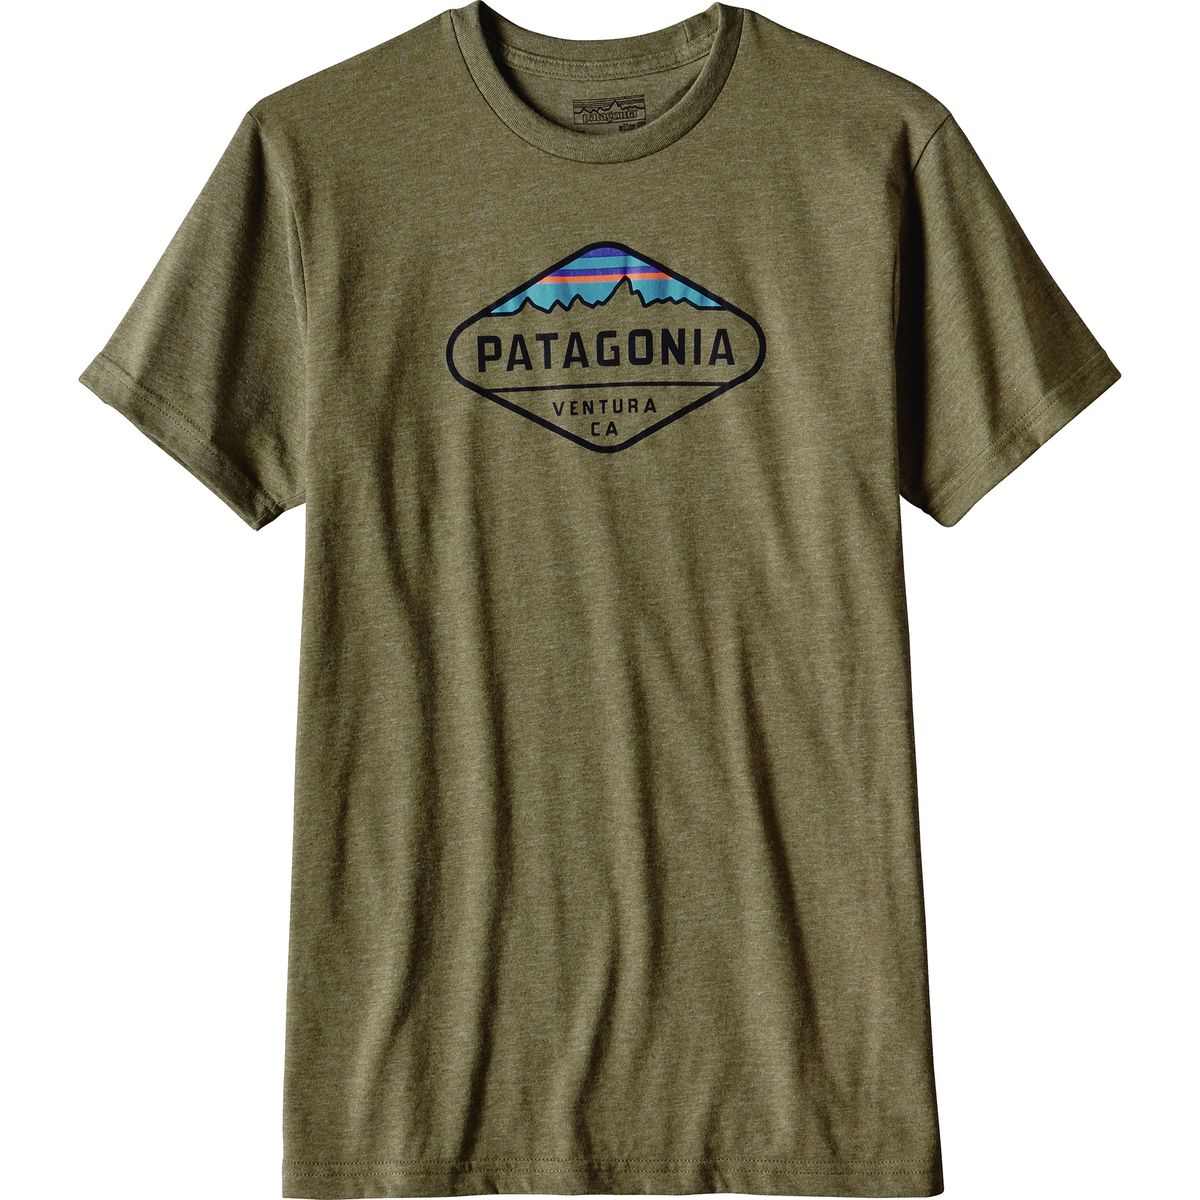 Patagonia Men's T-Shirts, stylish comfort clothing